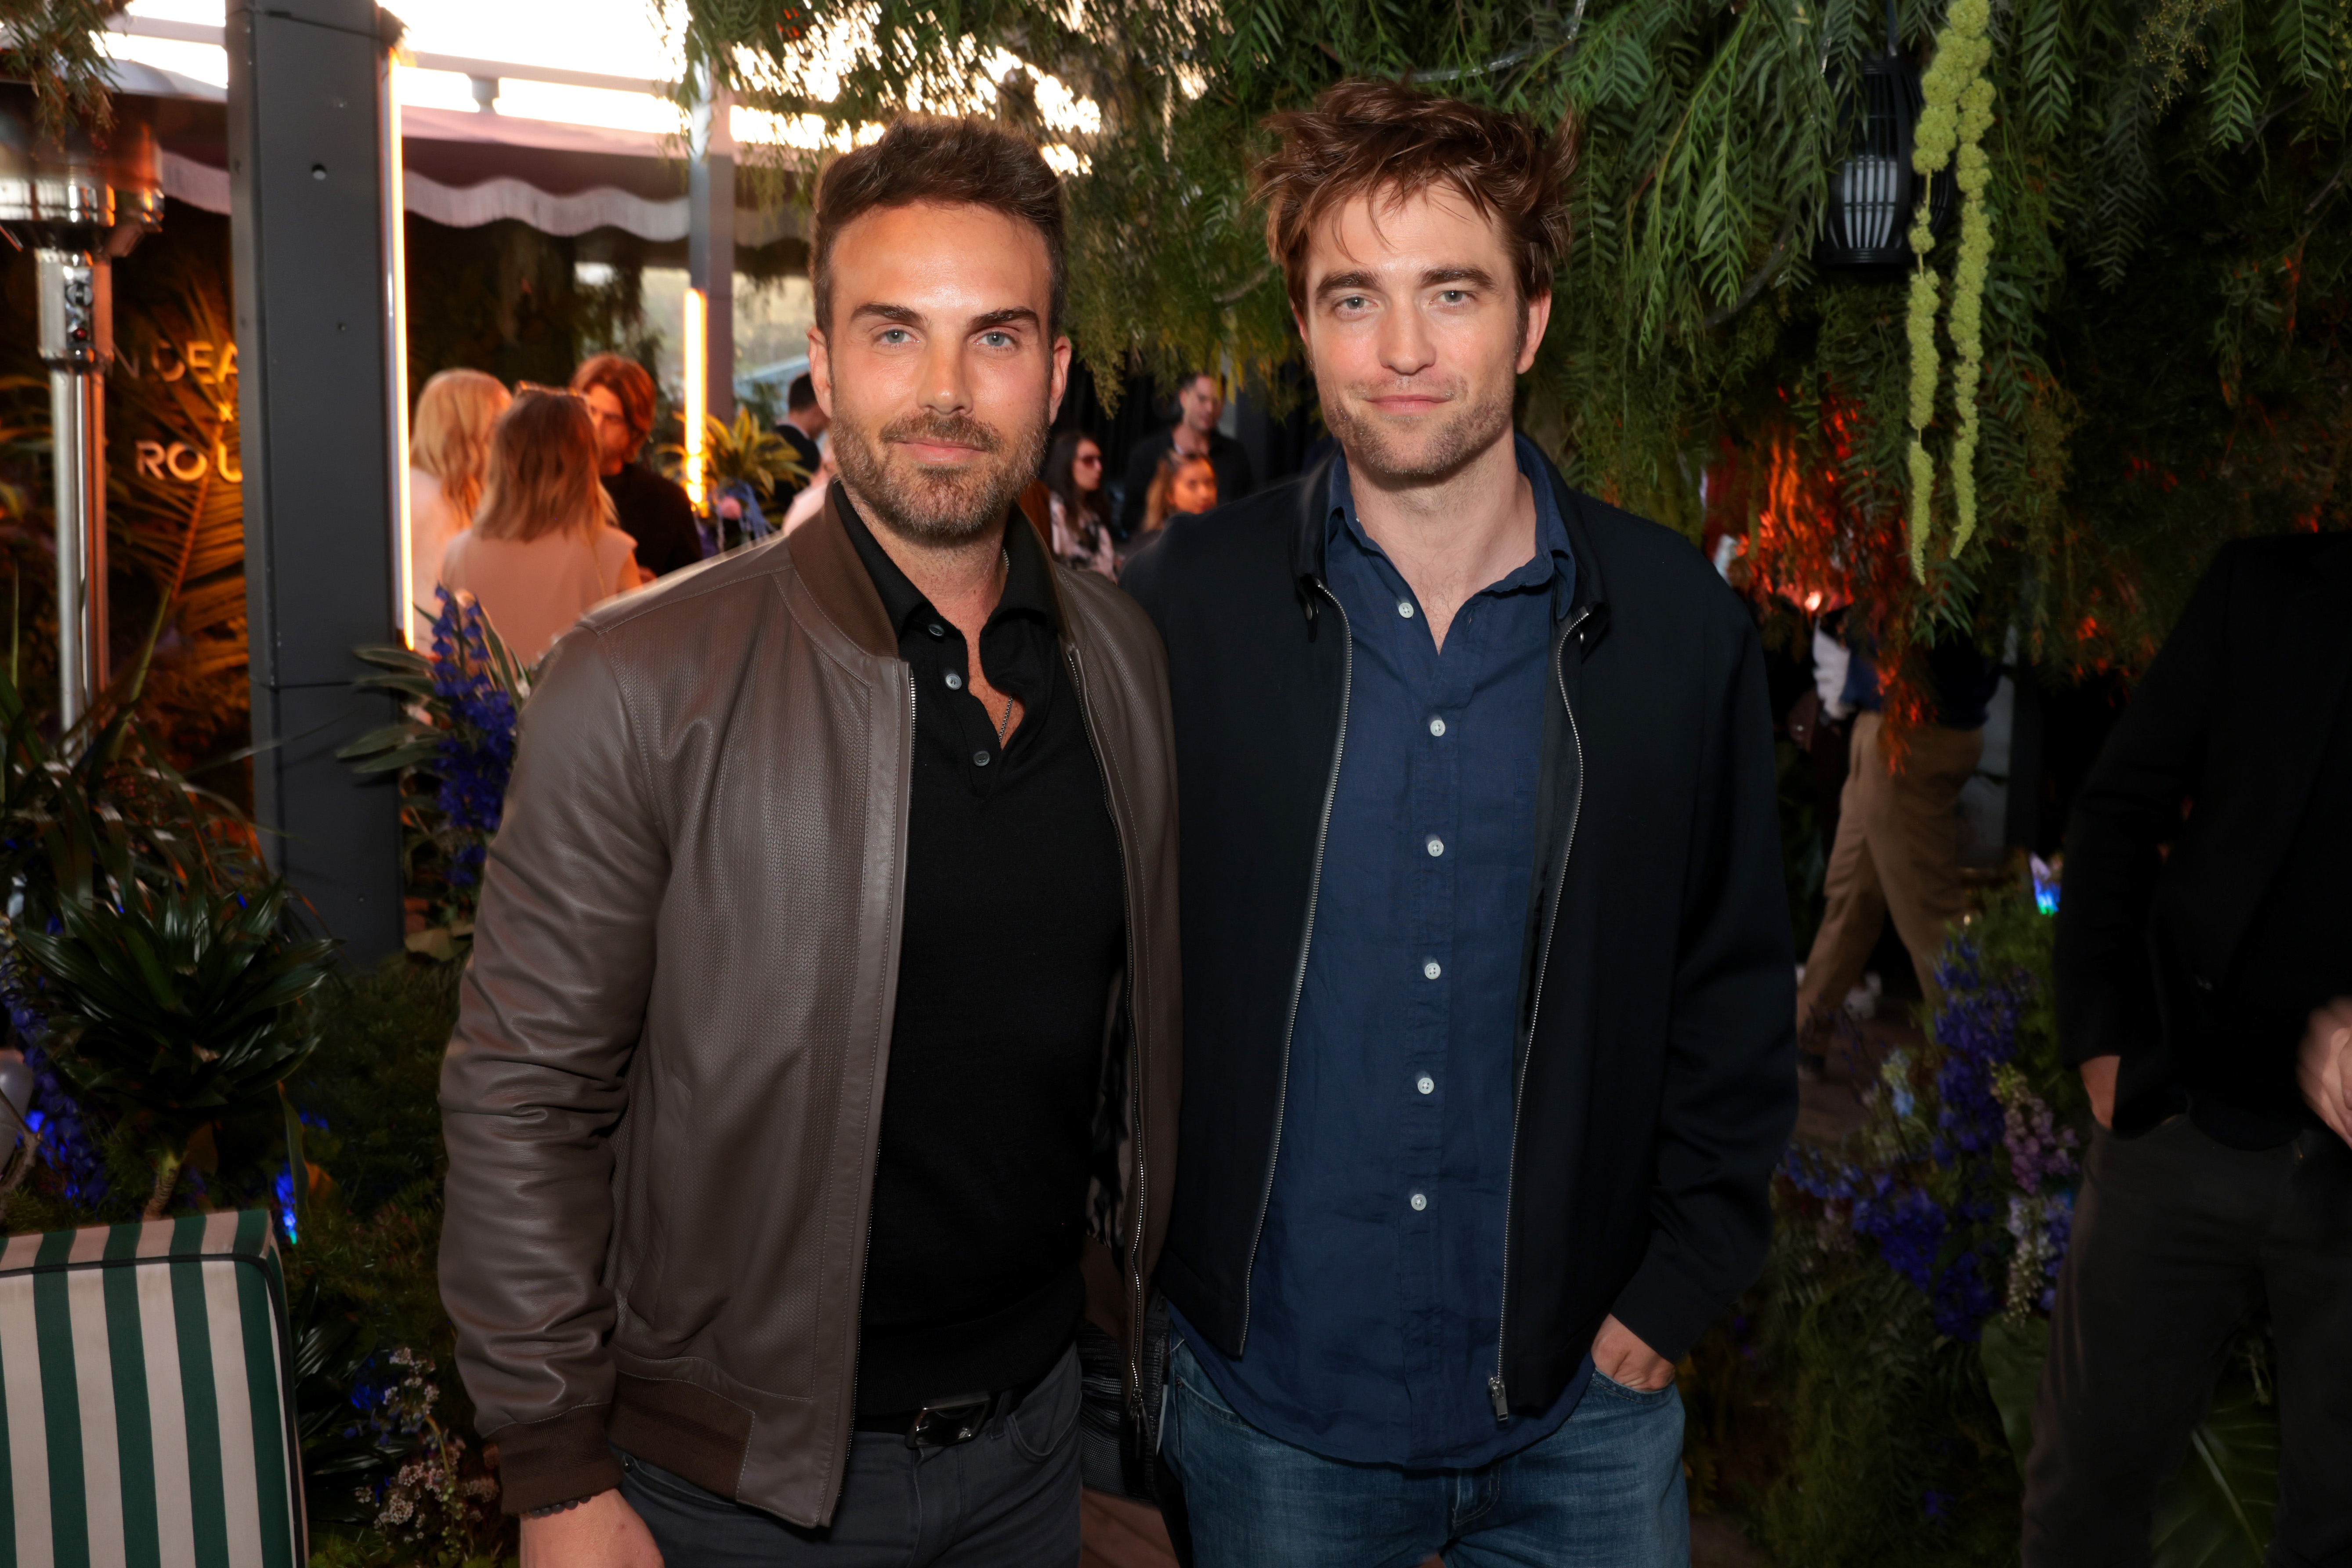 Evan Walker and Robert Pattinson